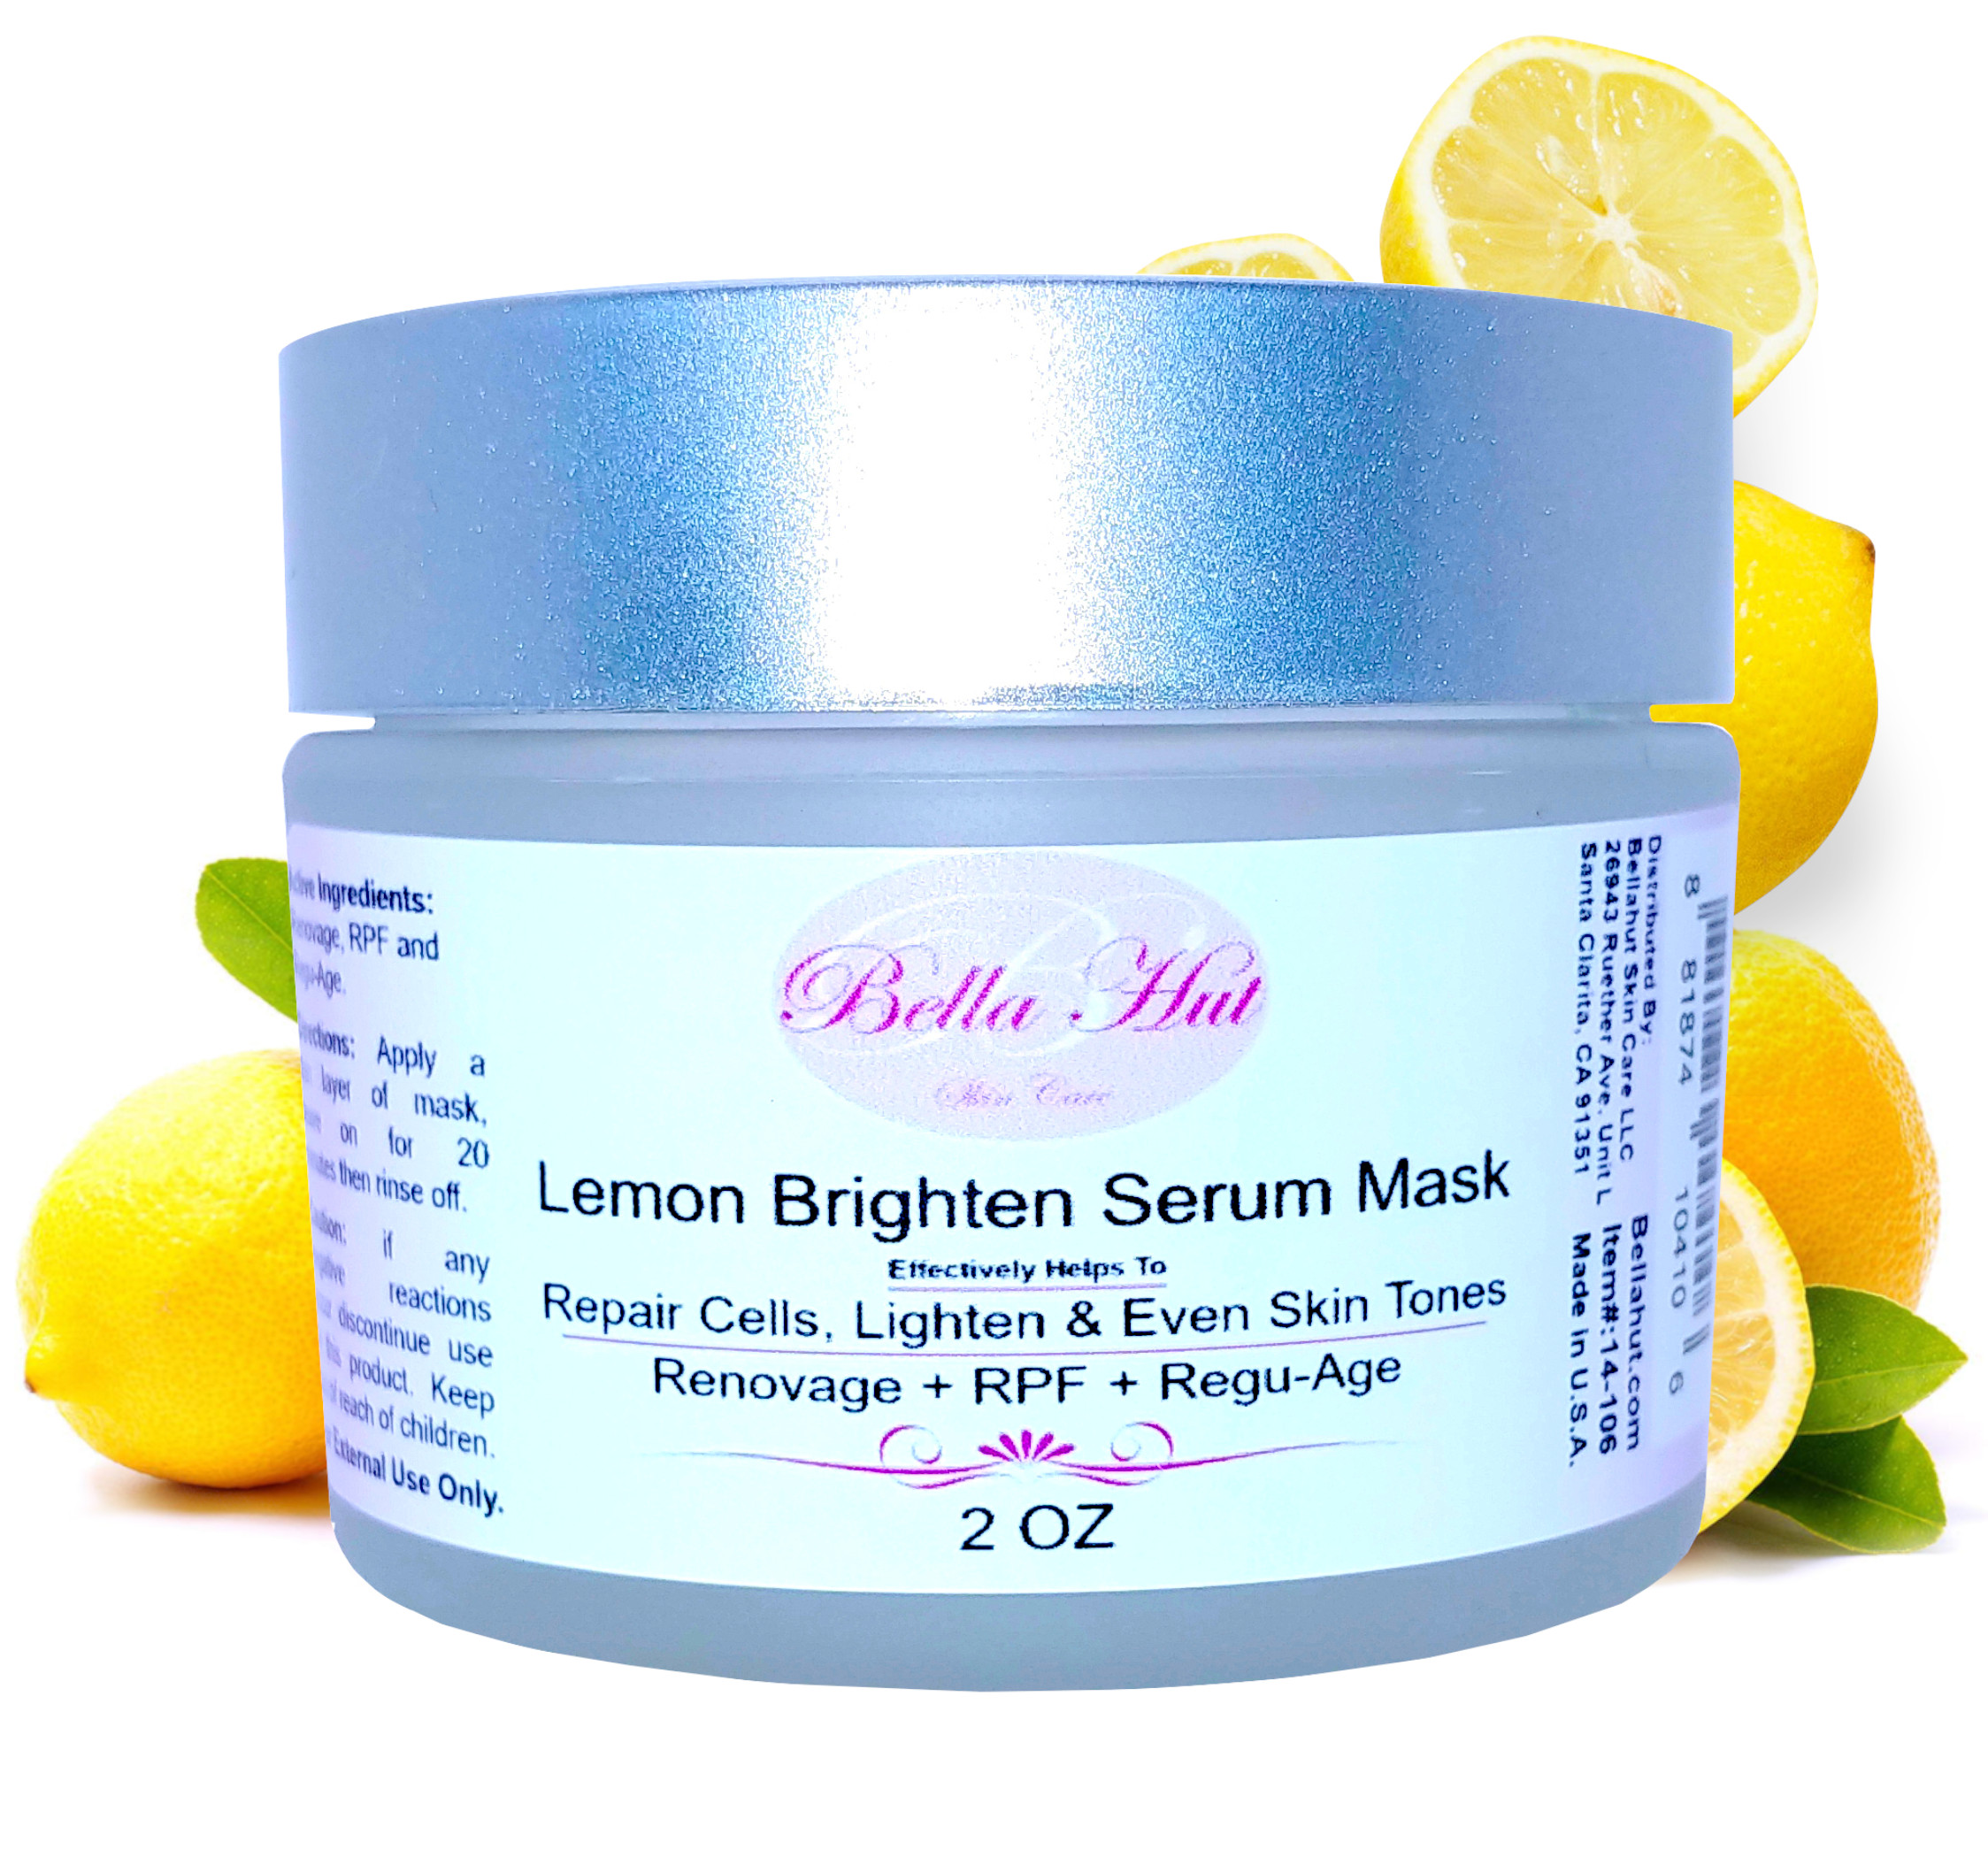 Lemon Brighten Serum Mask with Renovage, Rpf And Regu-Age for cellular repair and skin lightening